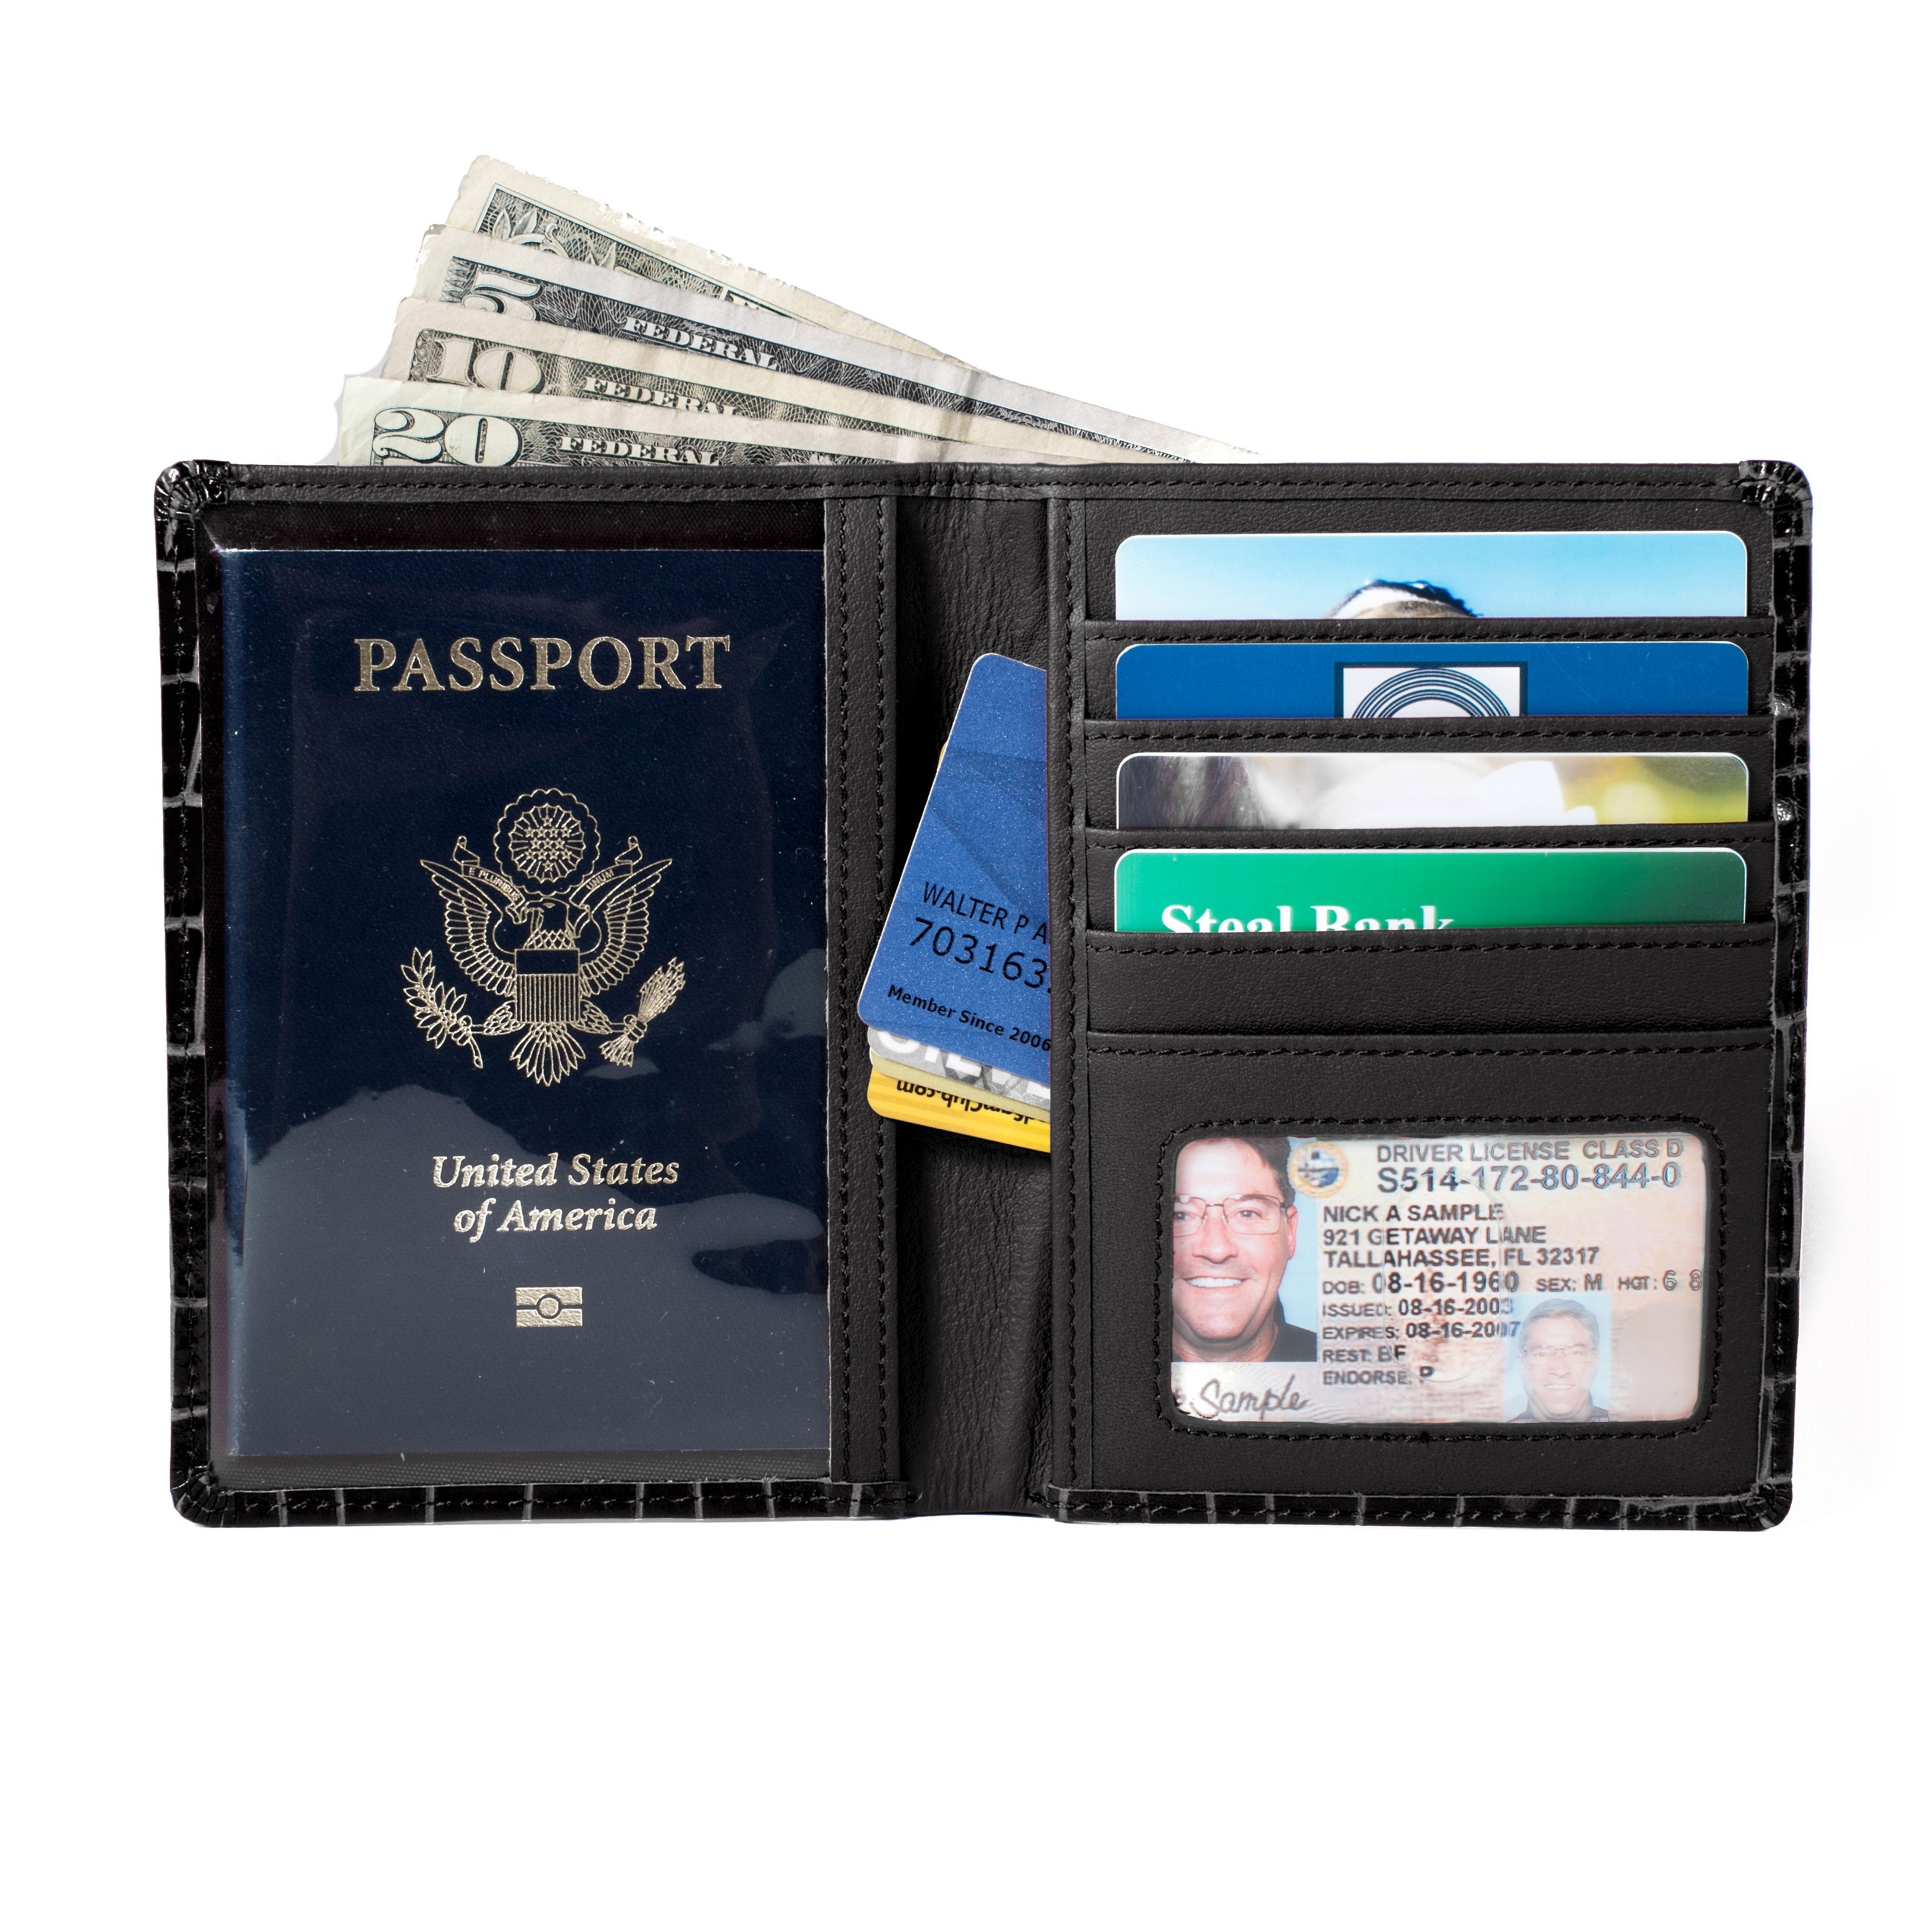 ID Stronghold Passport RFID Blocking Passport Wallet Designer